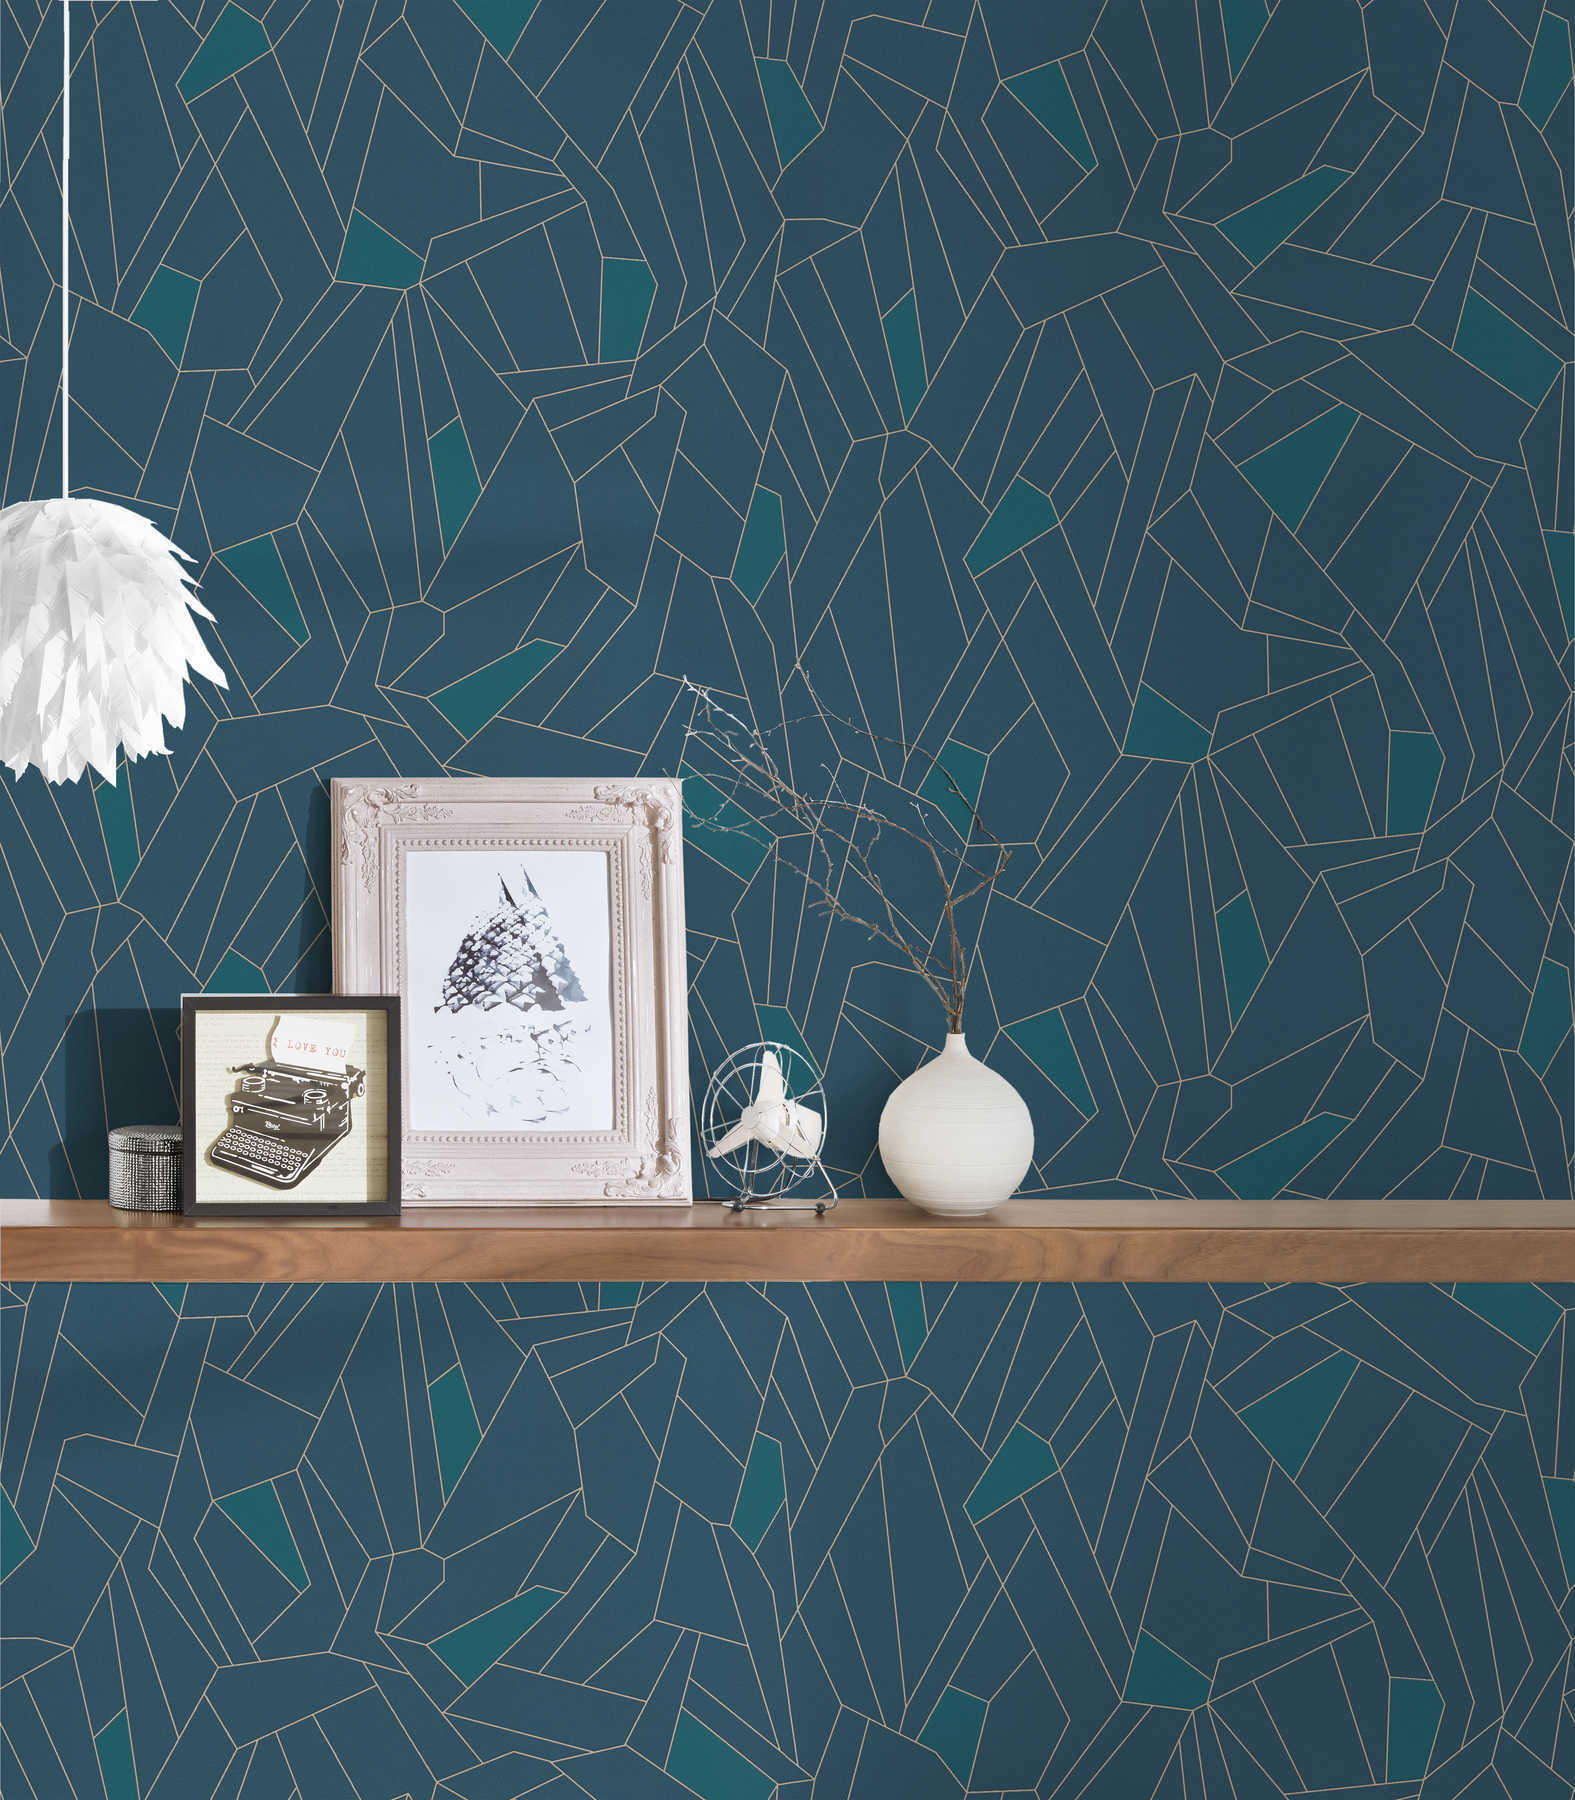             Retro non-woven wallpaper with glitter effect - blue, petrol, beige
        